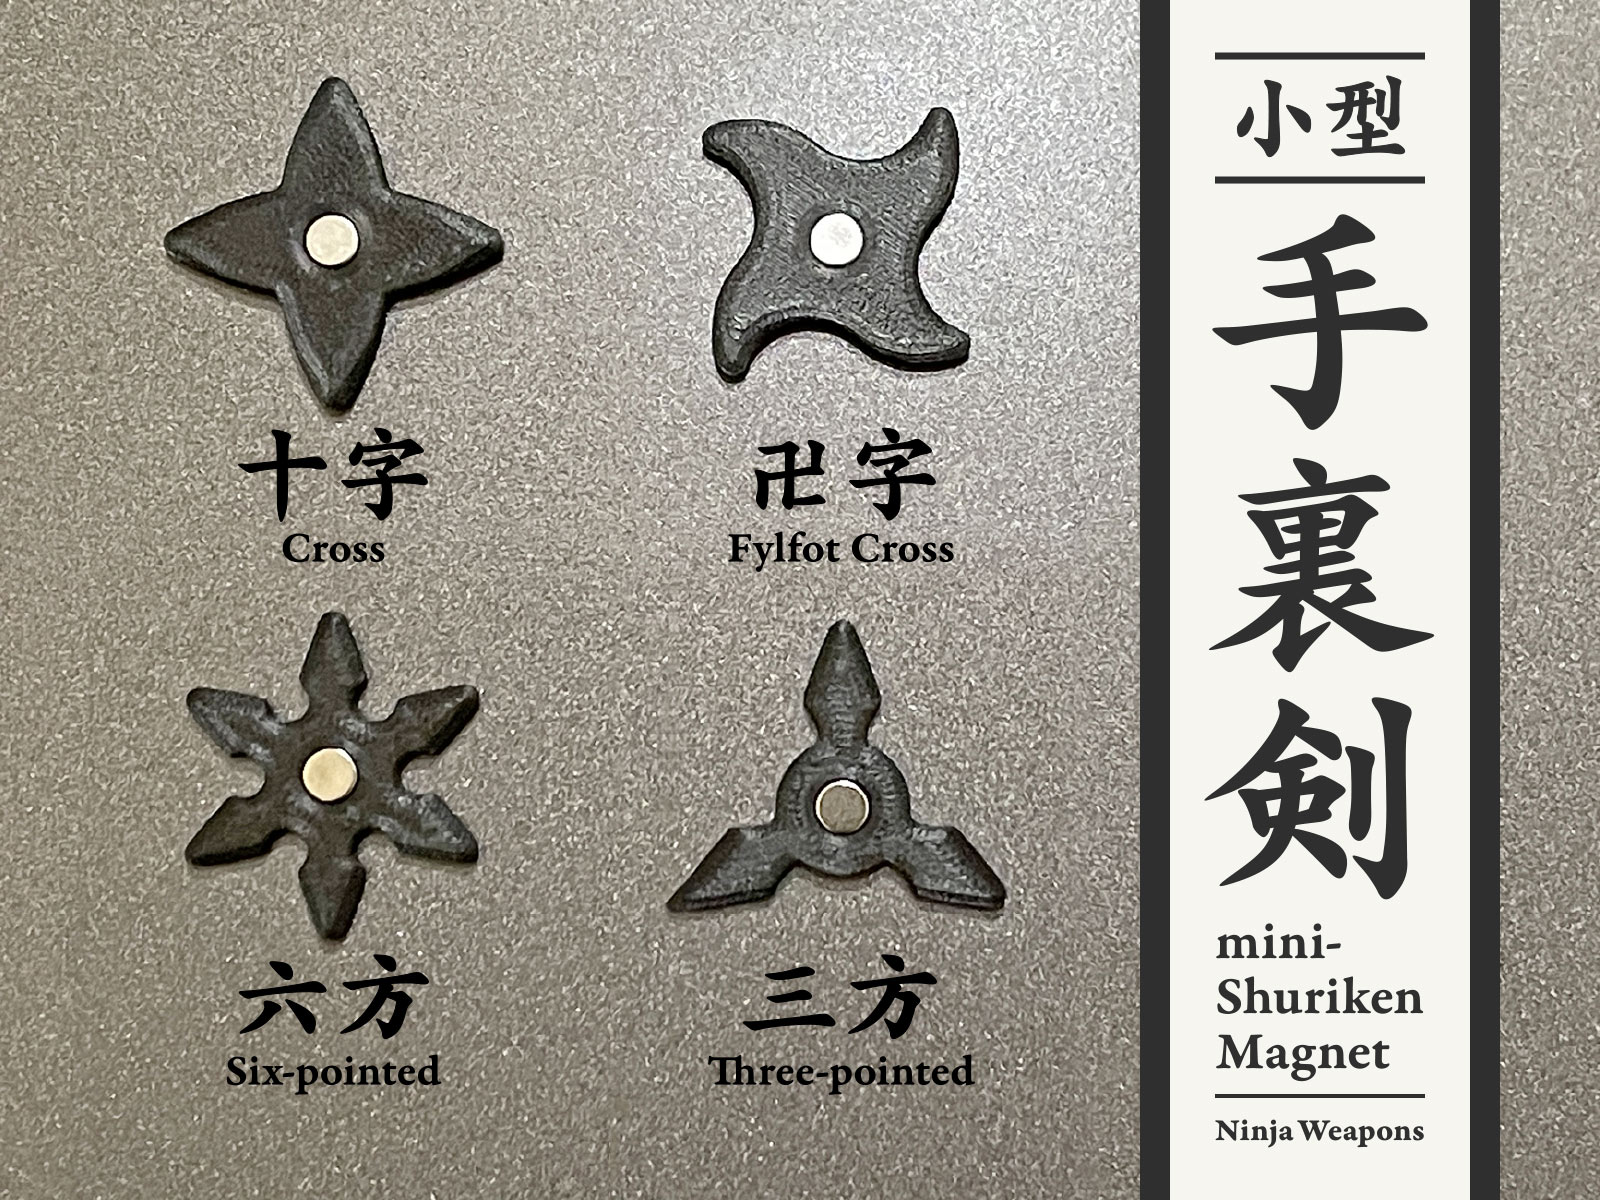 mini-Shuriken Magnet — Ninja Weapons